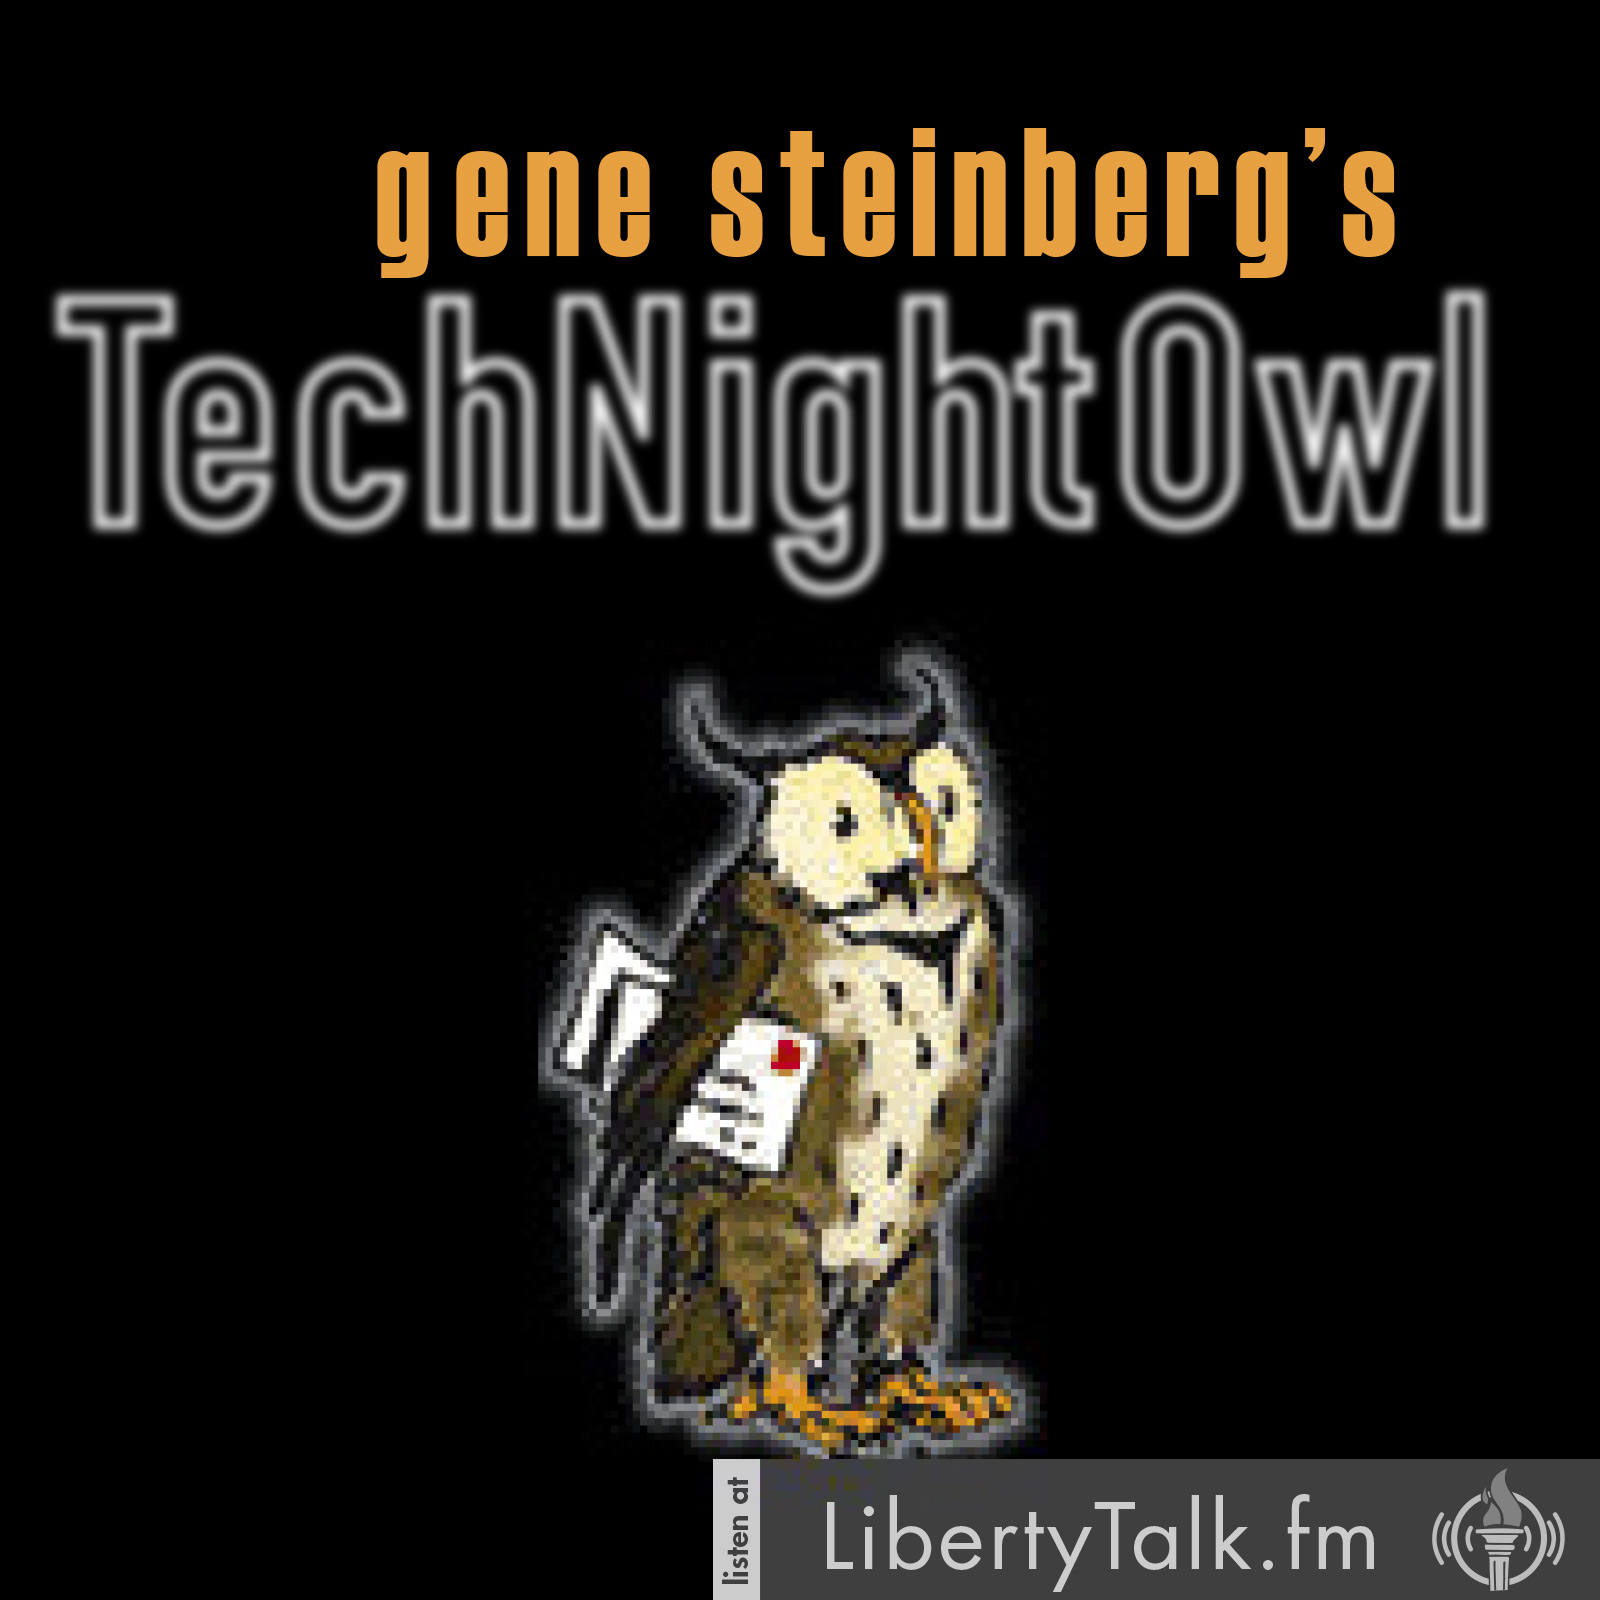 Tech Night Owl LIVE! on Liberty Talk FM